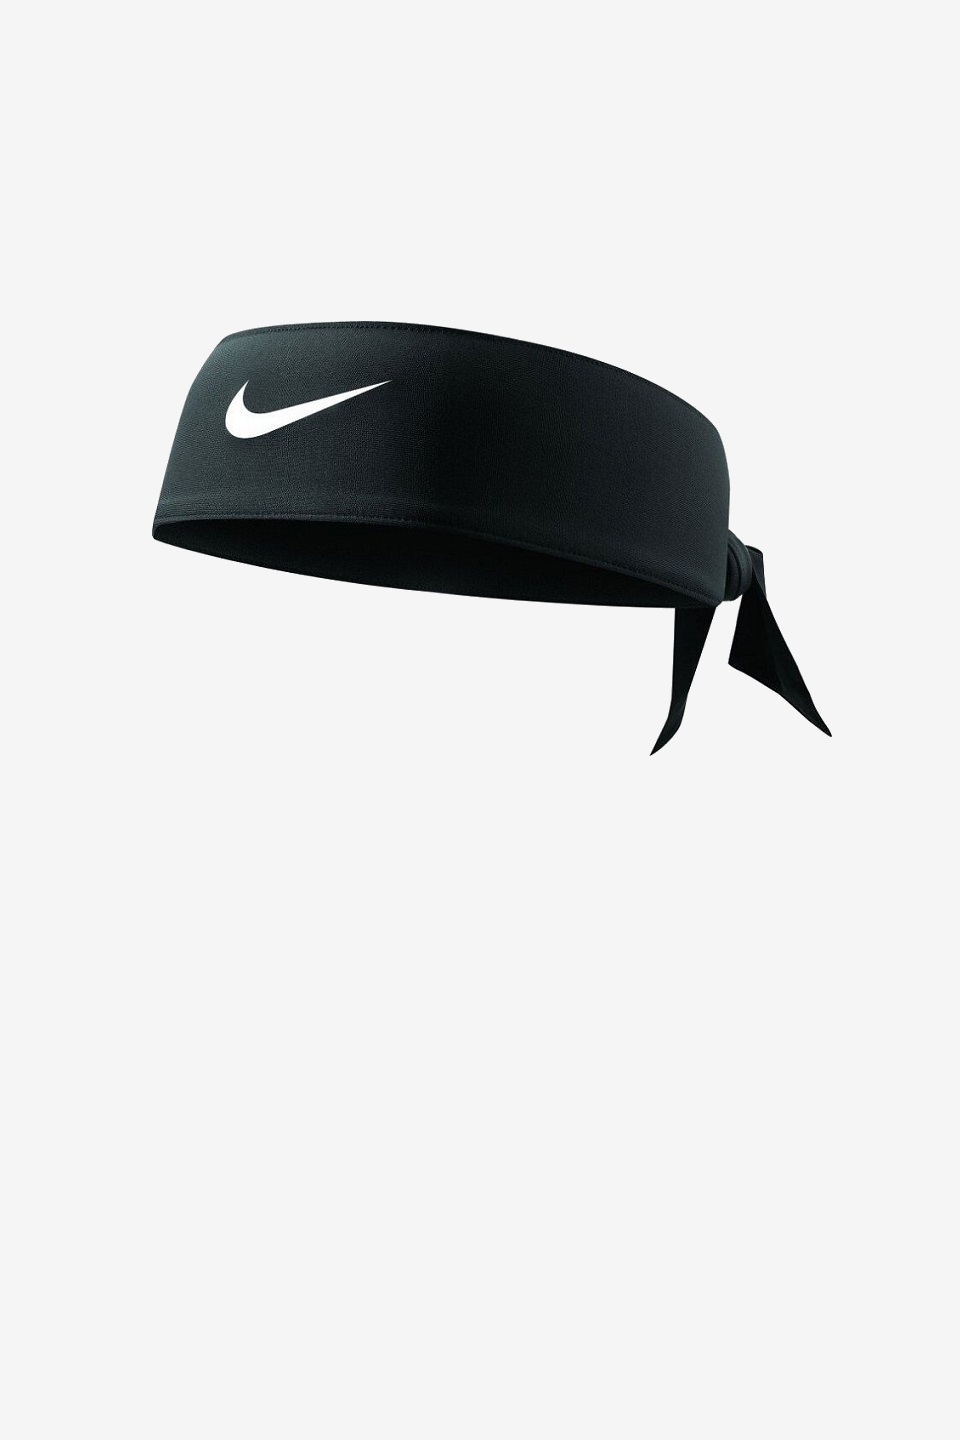 NIKE - Nike Dri-Fit Head Tie 3.0 Bandana Siyah